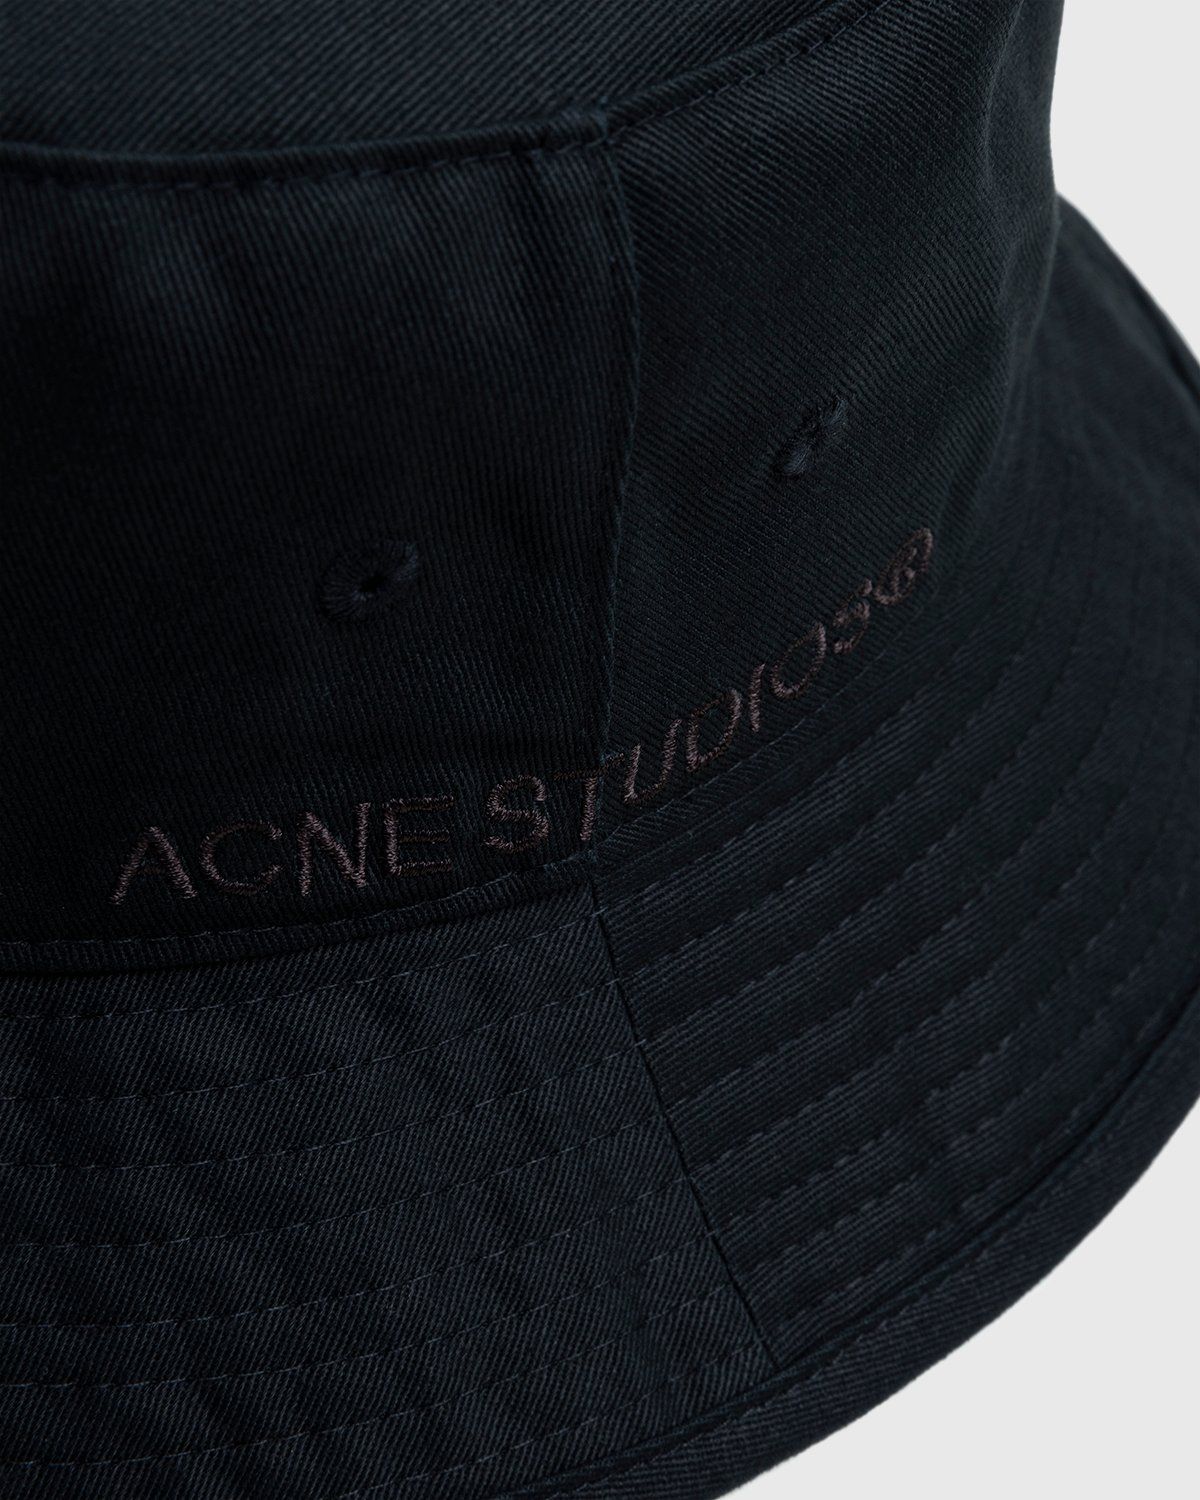 Acne Studios – Twill Bucket Hat Black - Hats - Black - Image 3